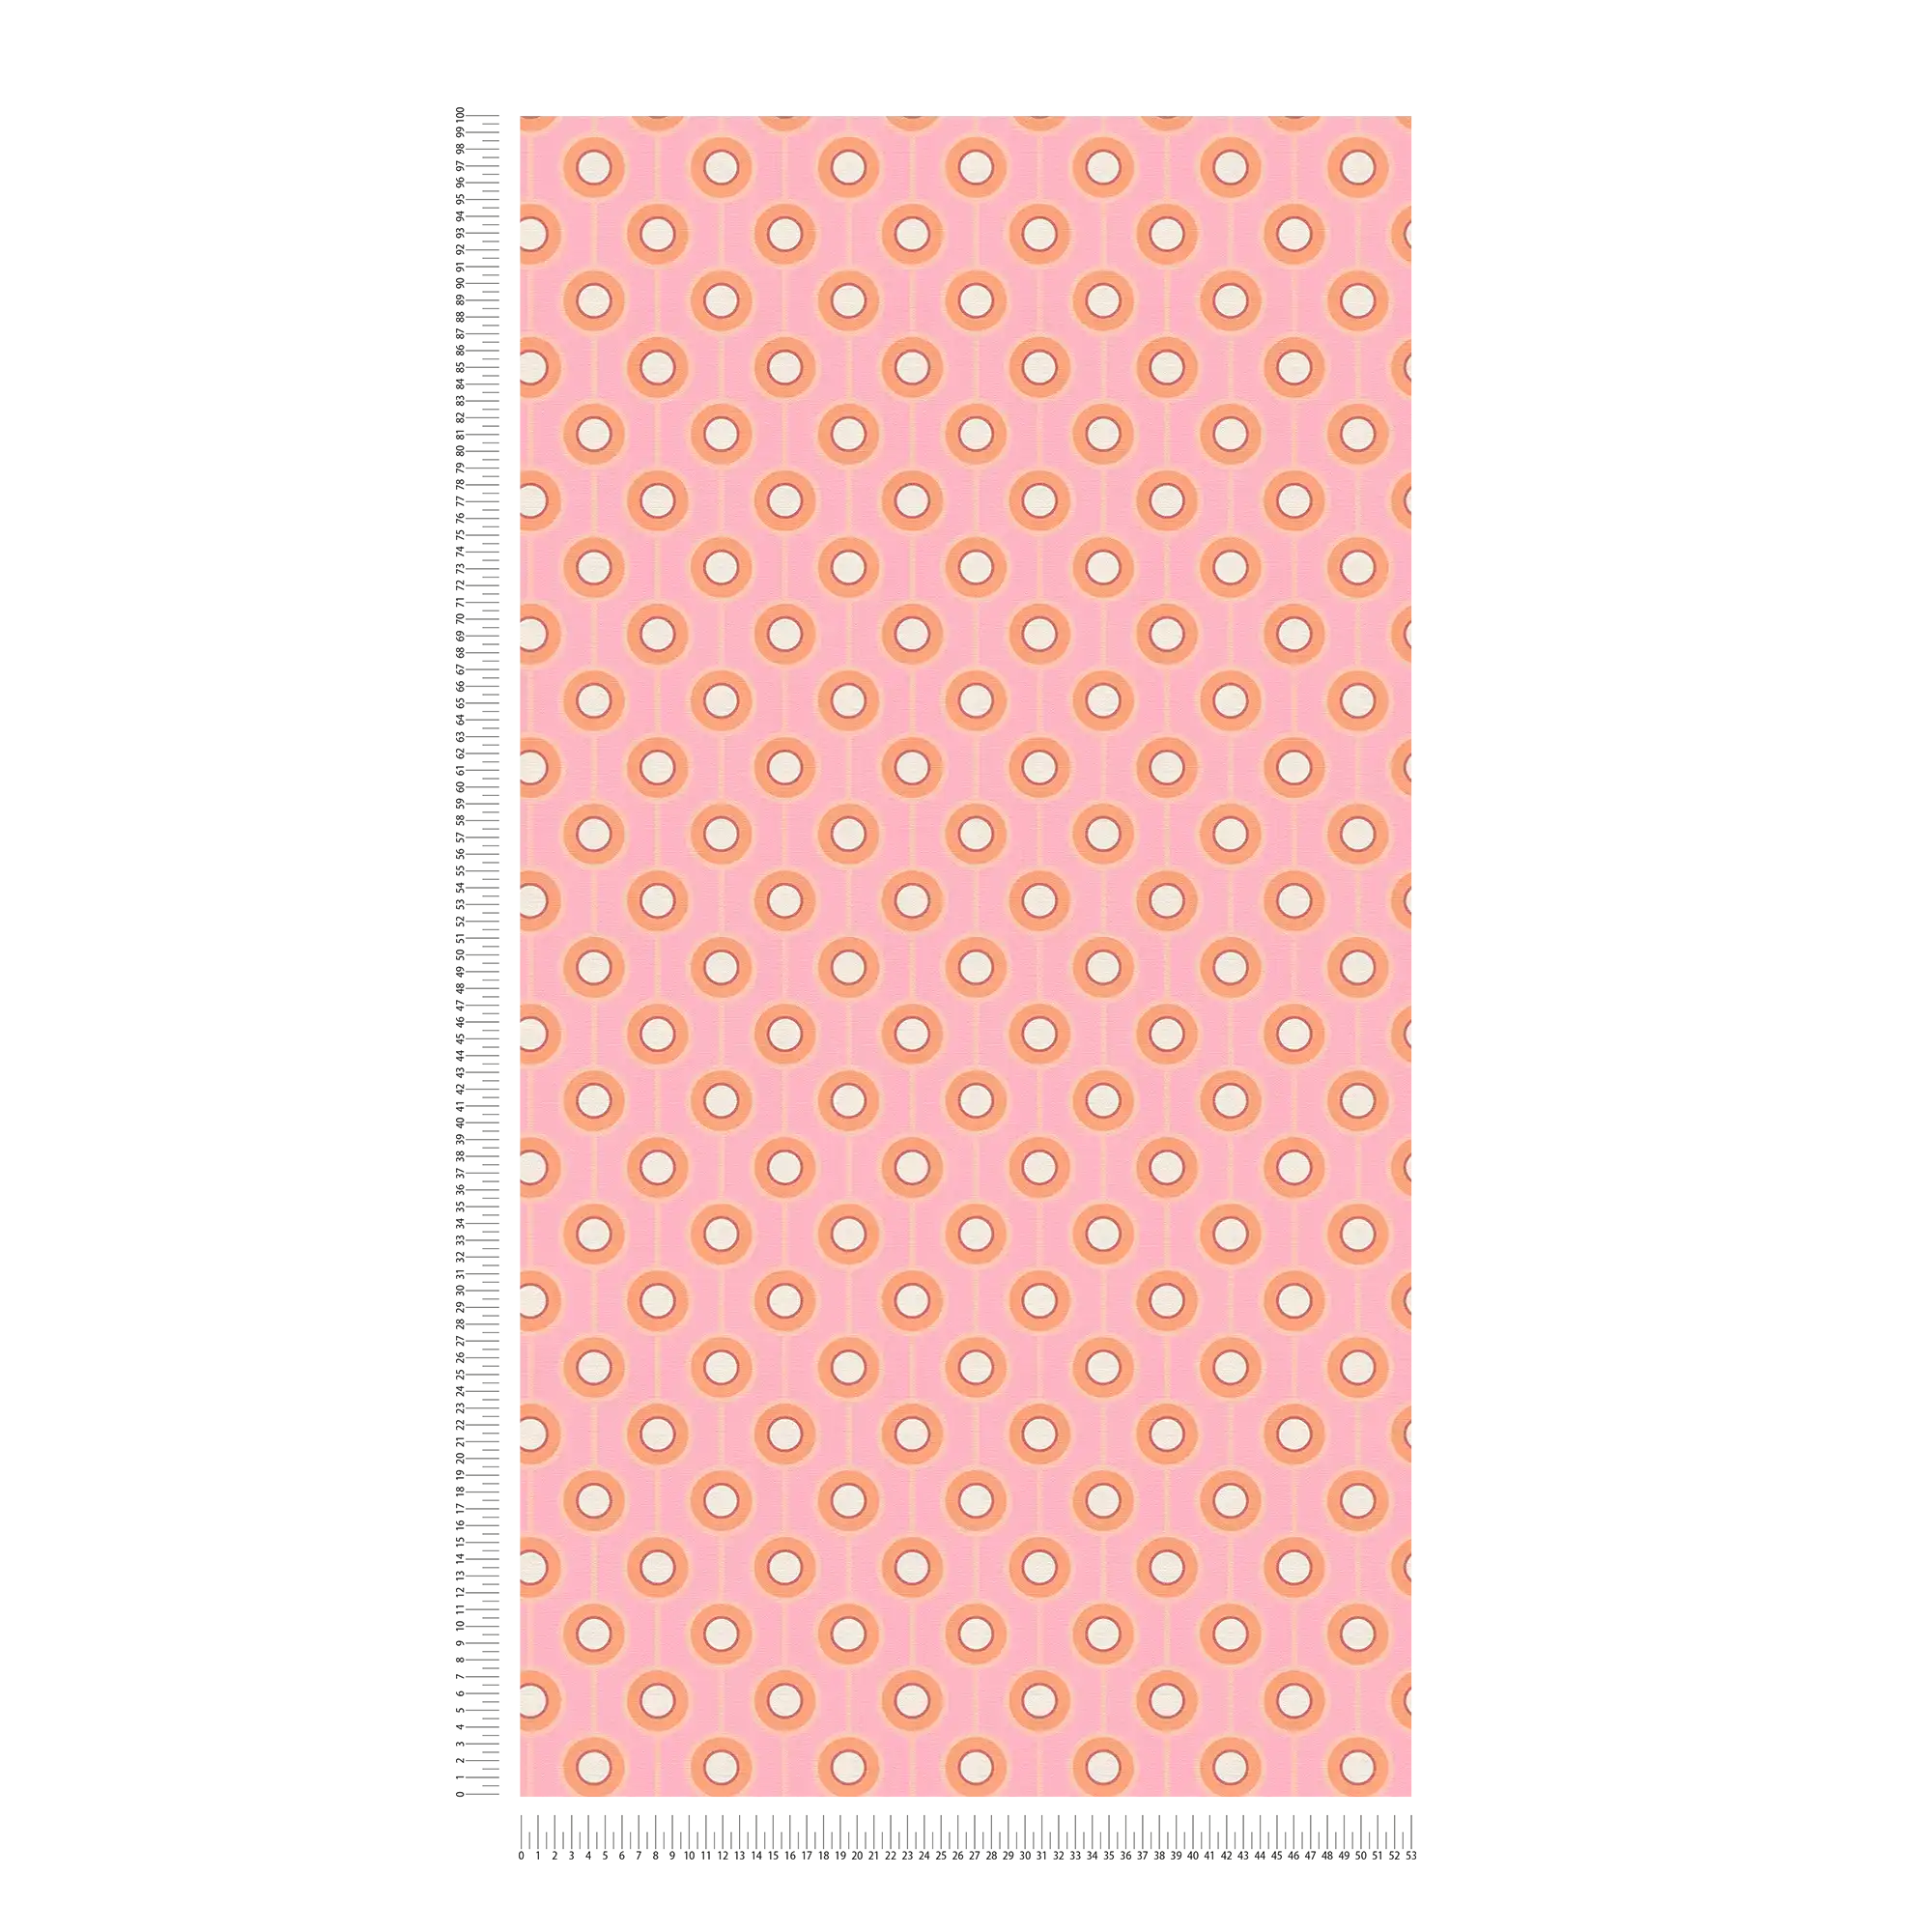             Lightly textured wallpaper with circle pattern - pink, orange, beige
        